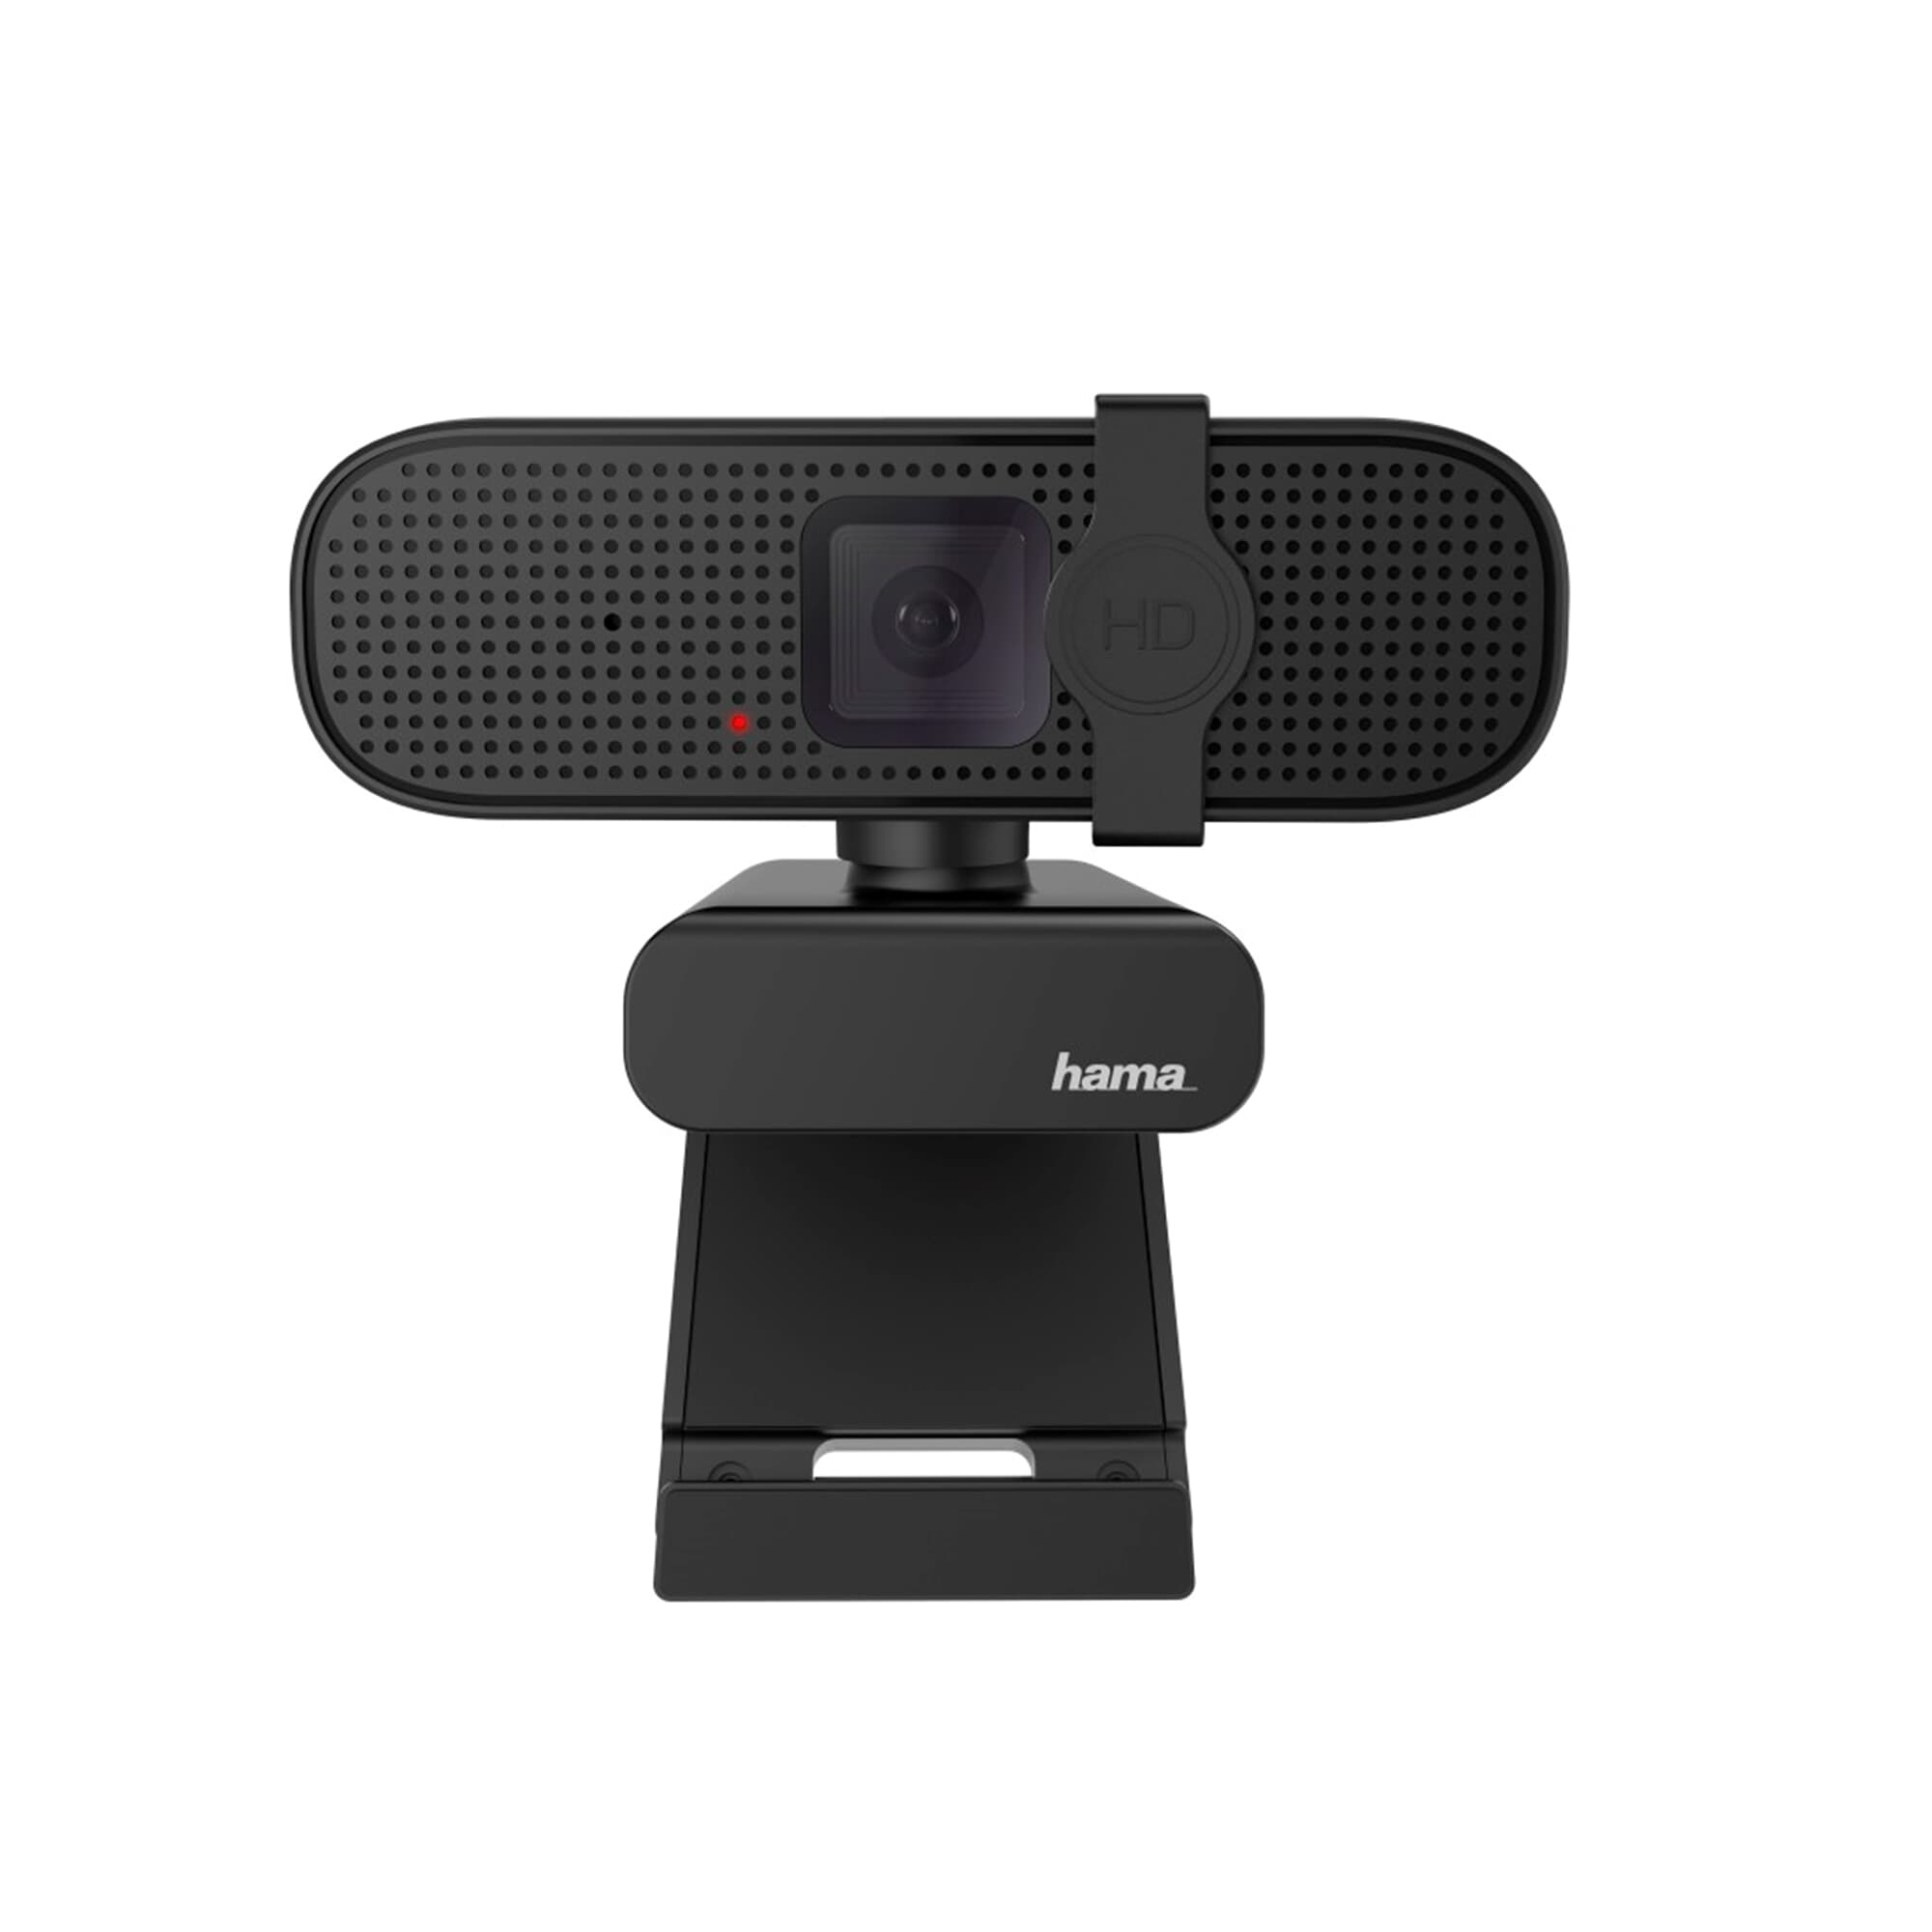 HAMA C-400 Webcam